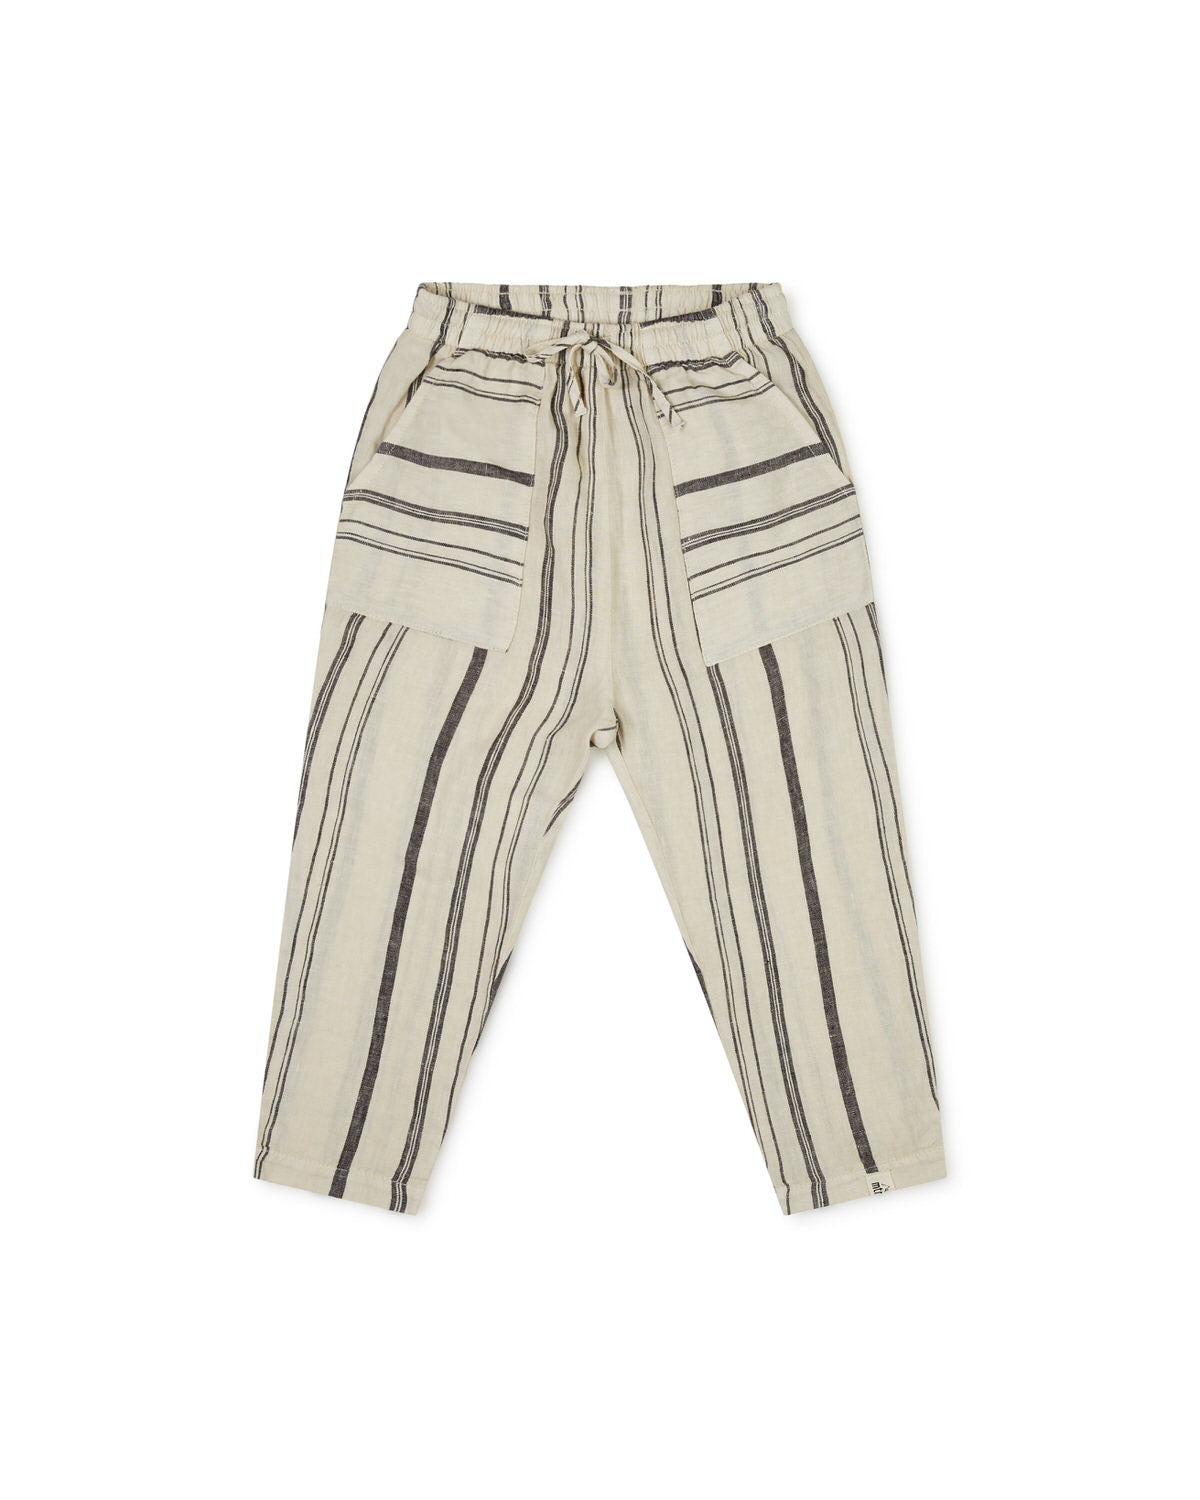 Lio Pants beige/striped